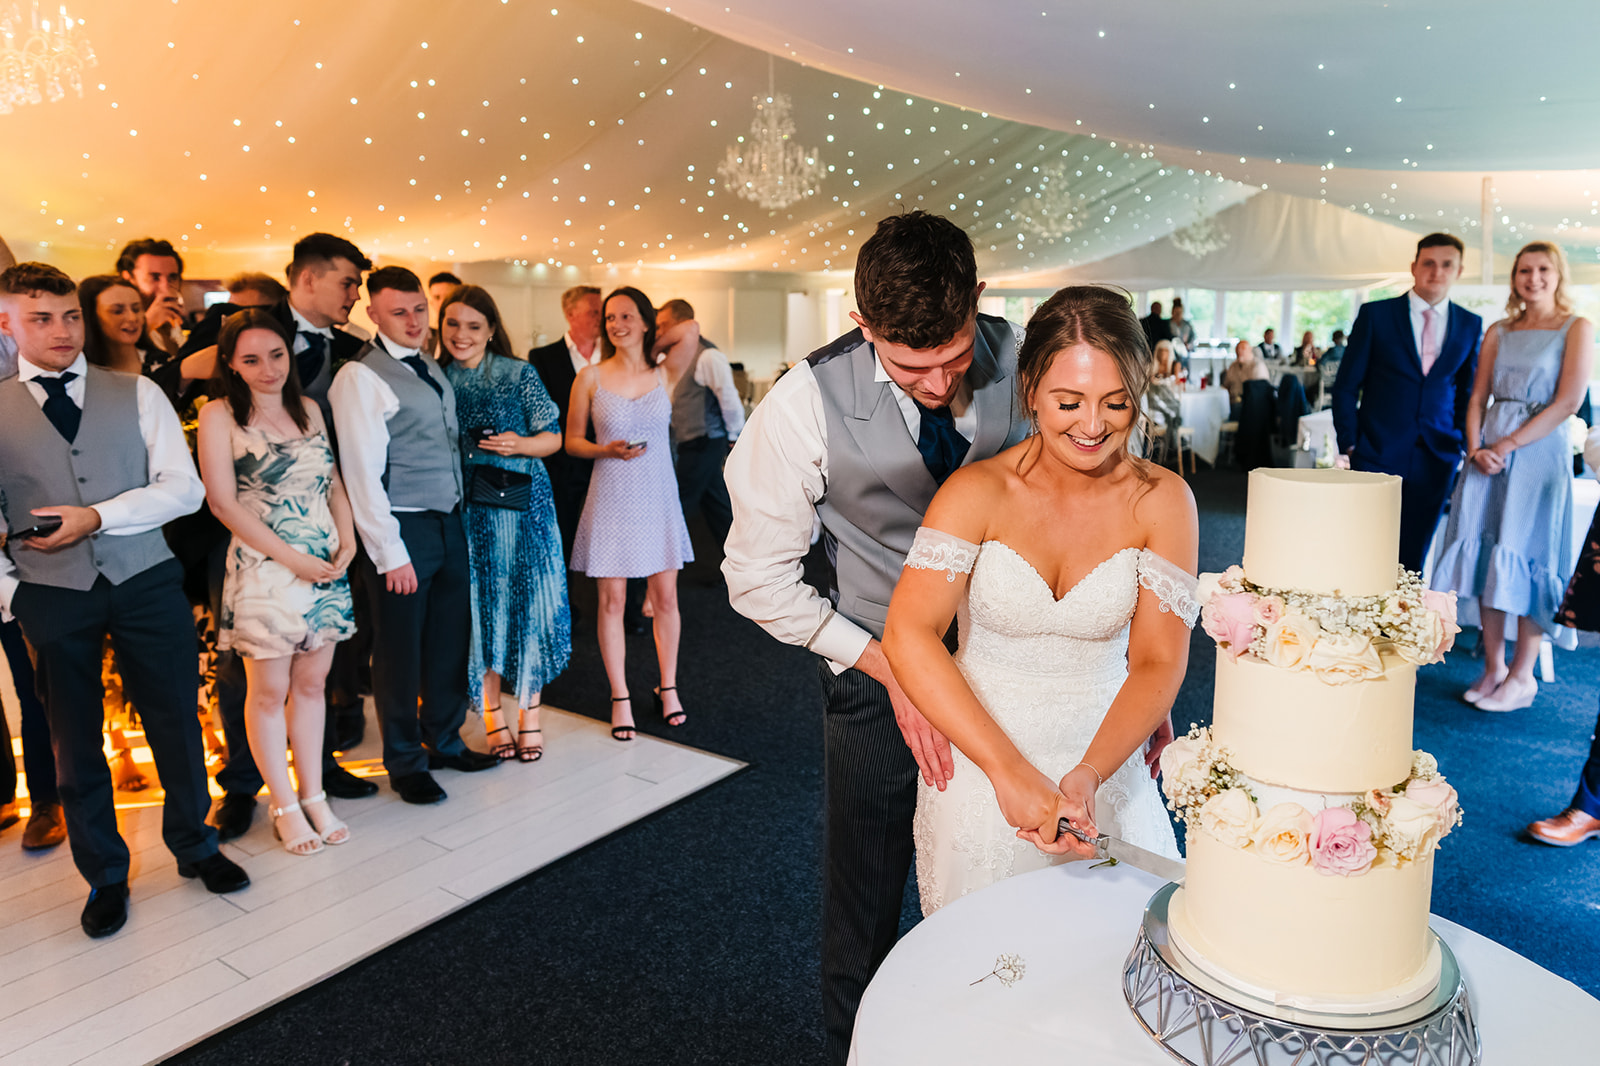 Shottle Hall Wedding Photography - bride and groom cutting the wedding cake